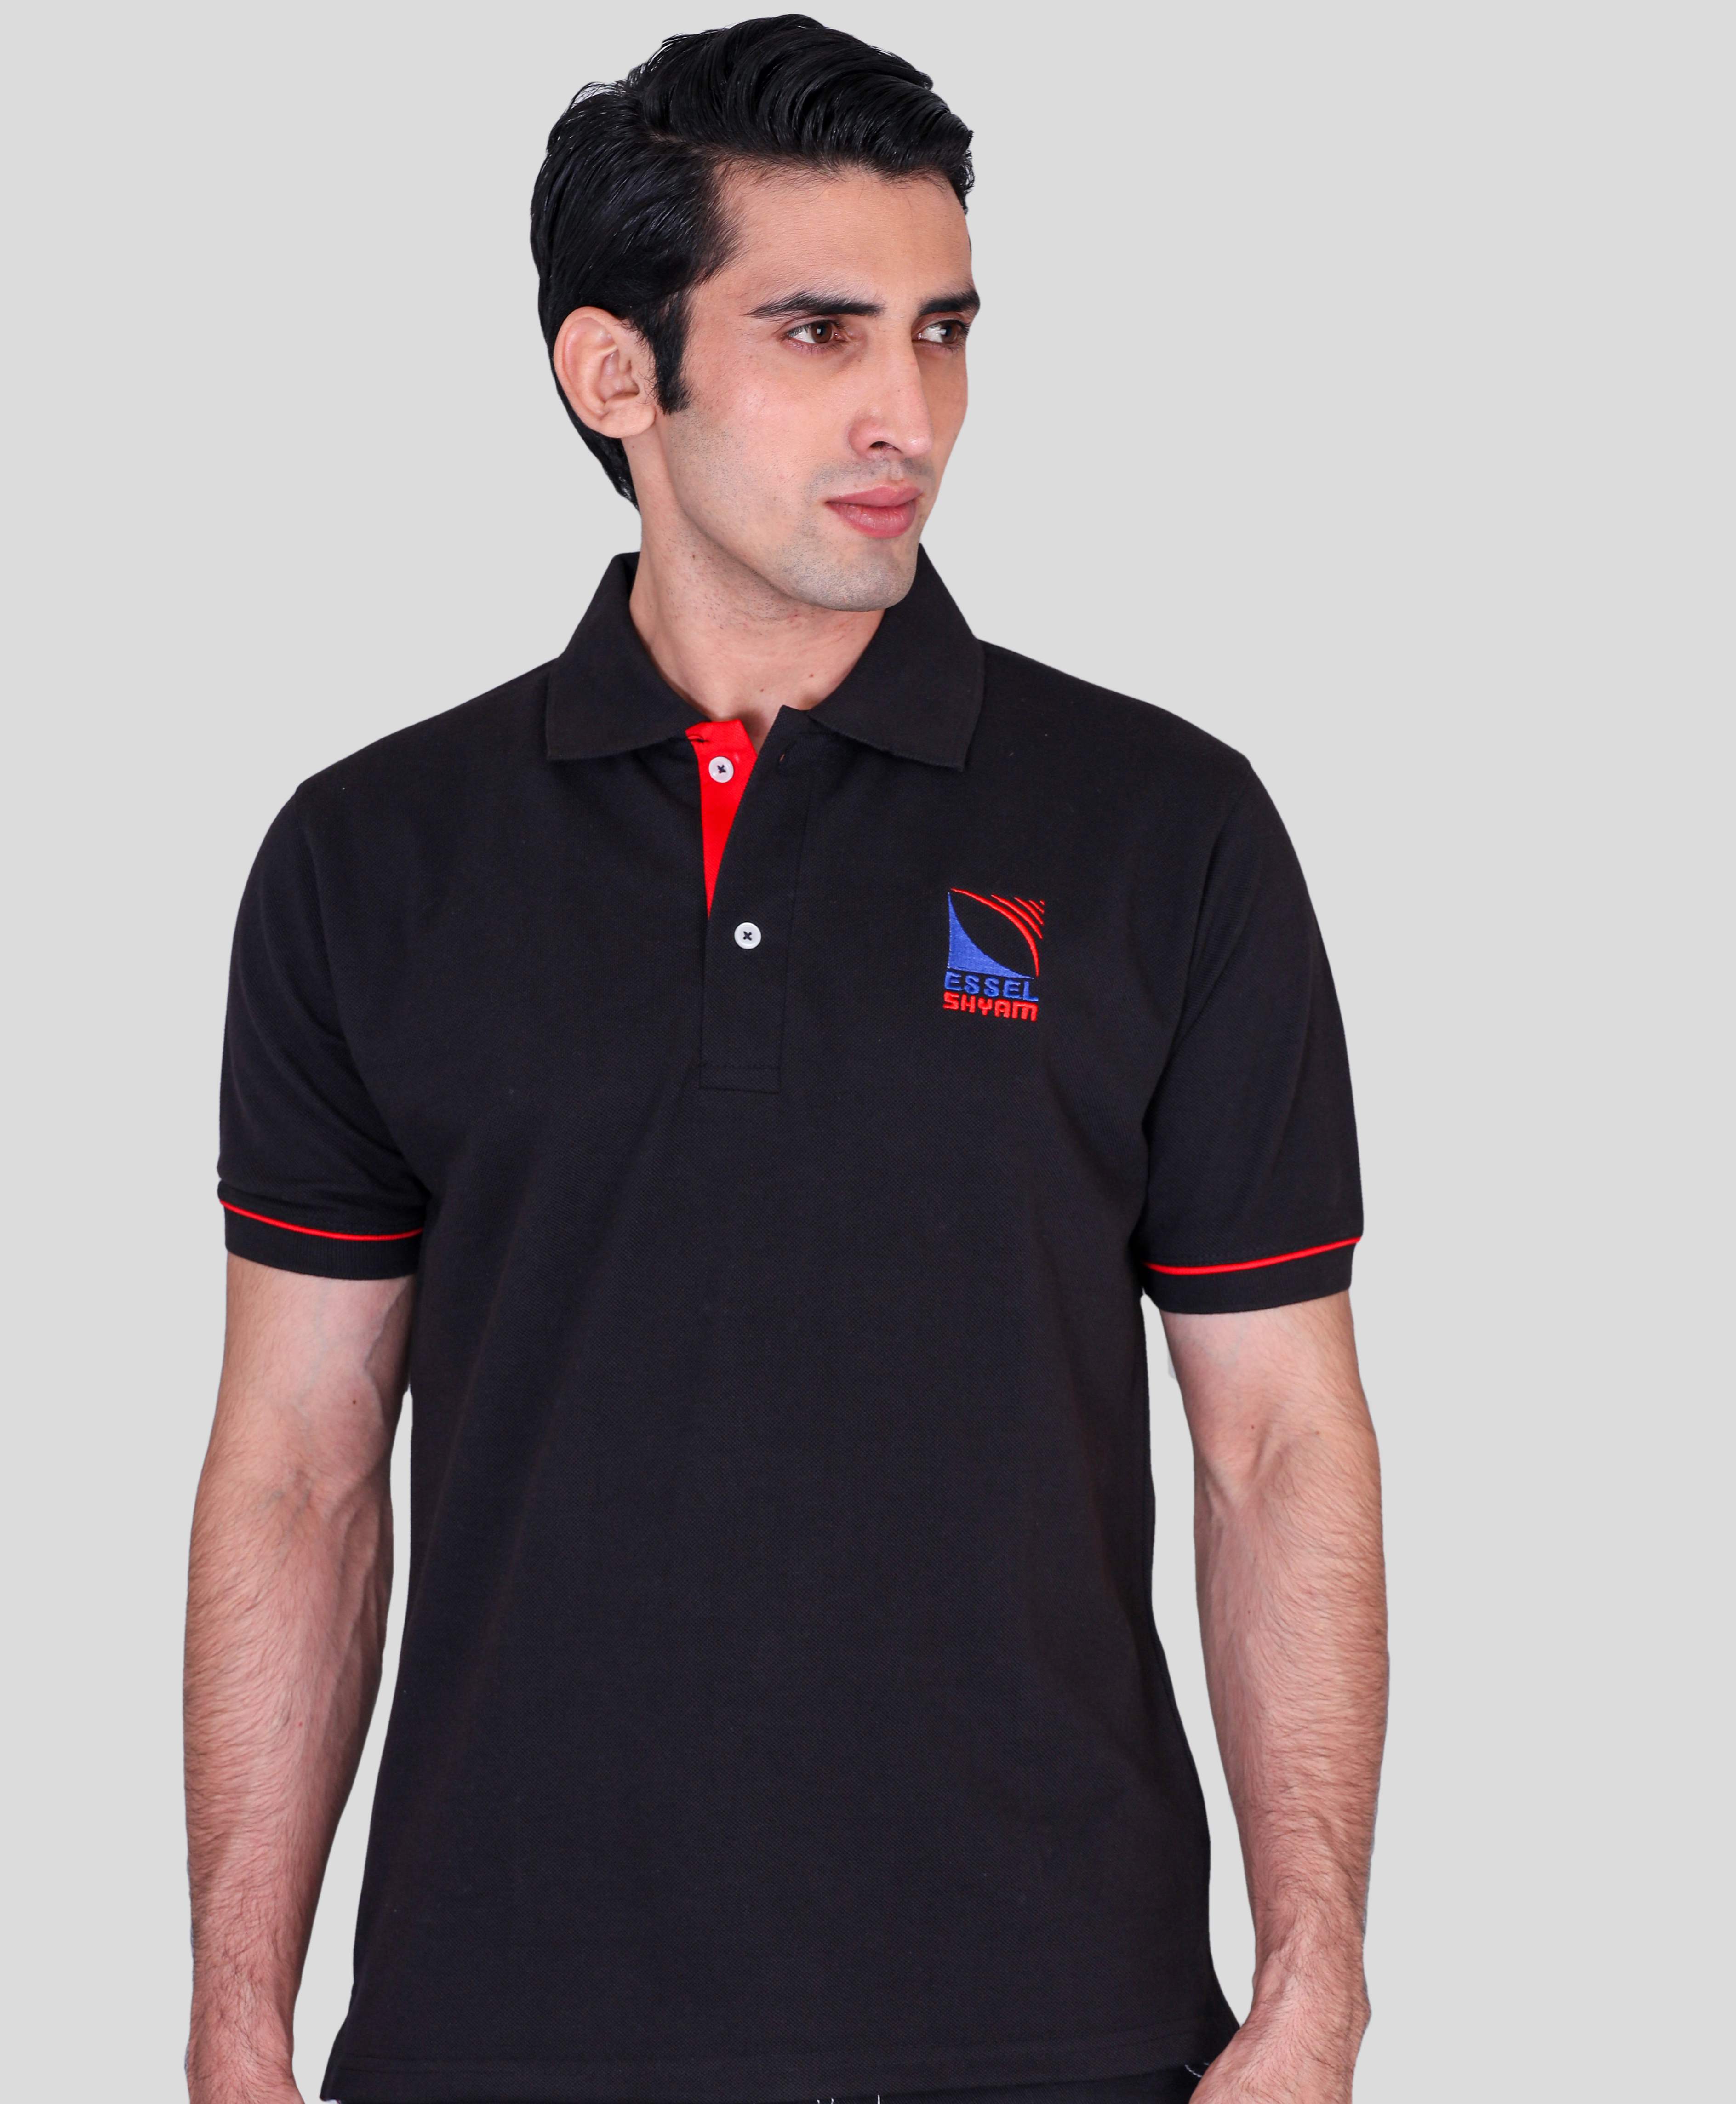 Essel Shyam black promotional polo t-shirts supplier 